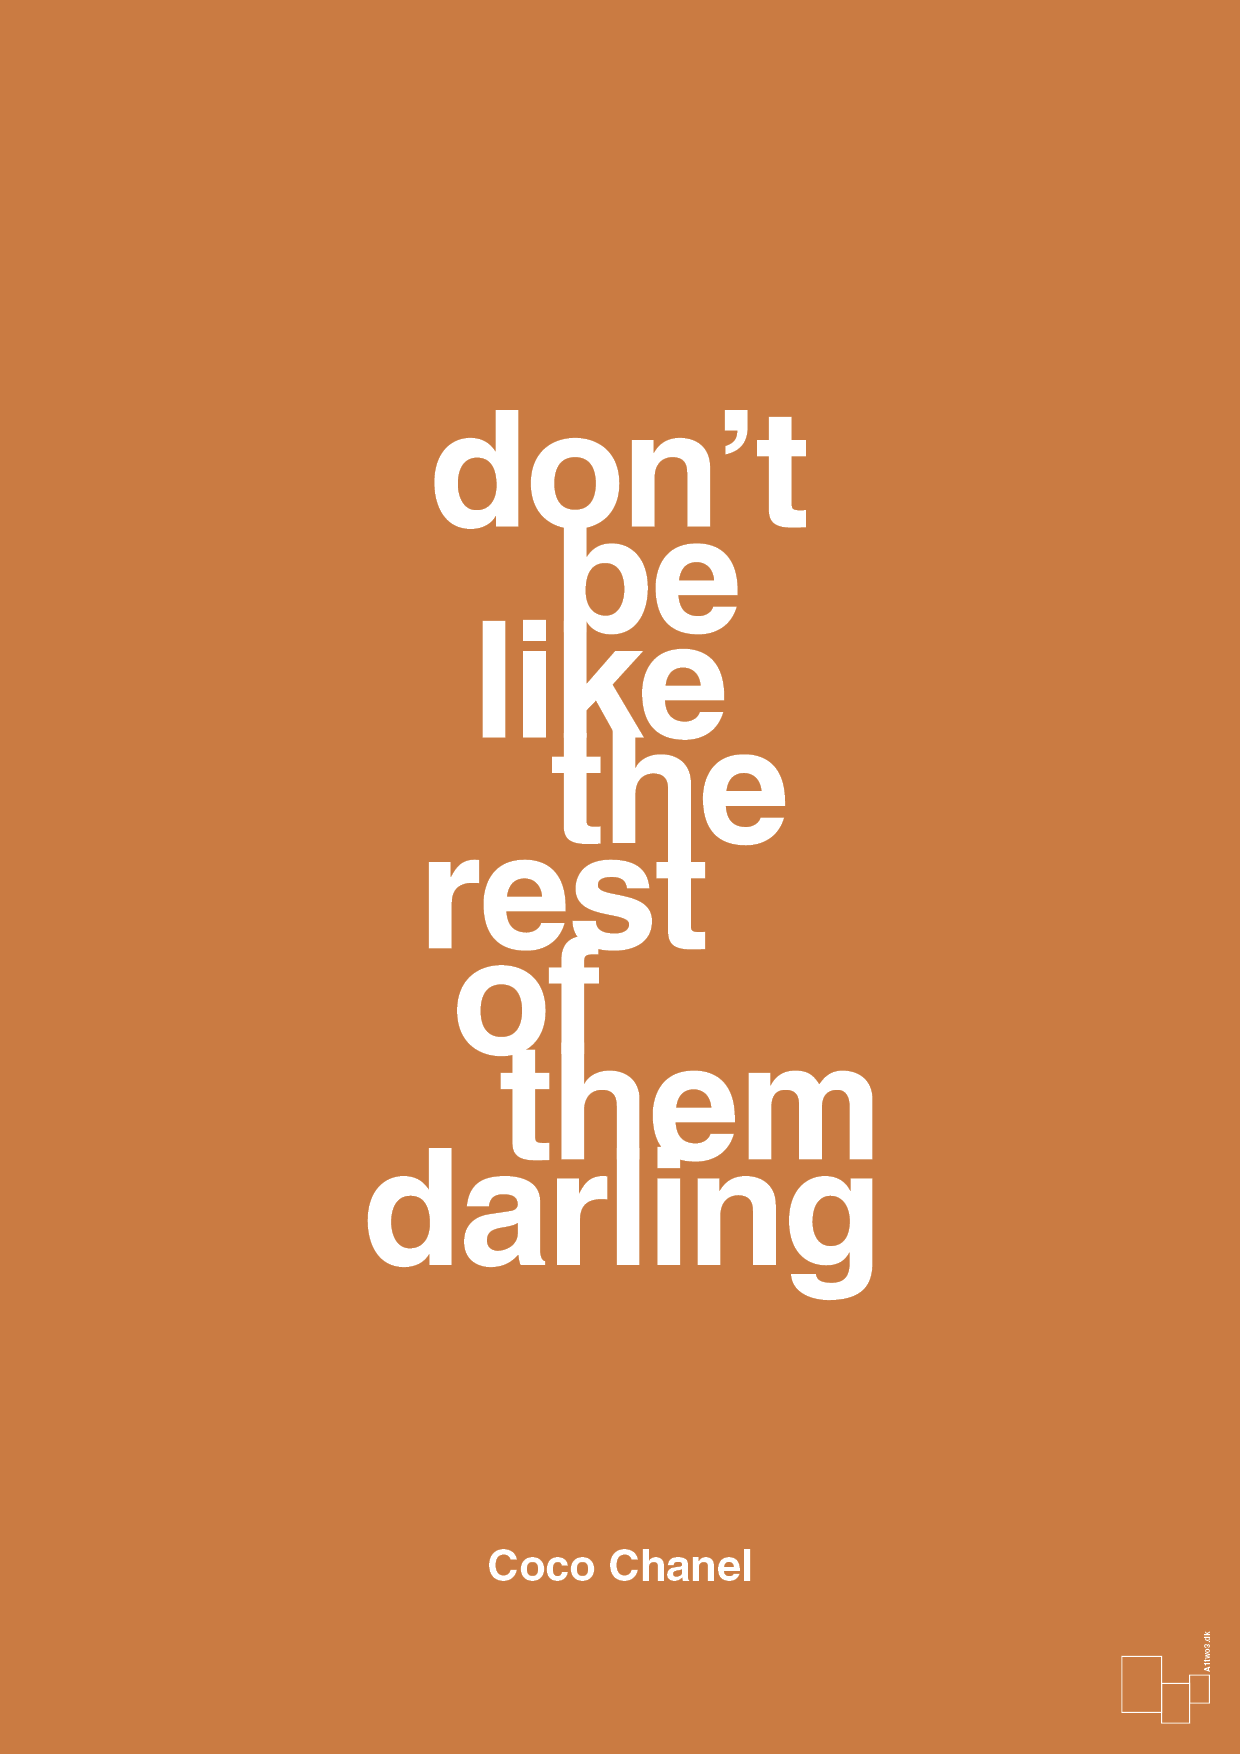 don’t be like the rest of them darling - Plakat med Citater i Rumba Orange